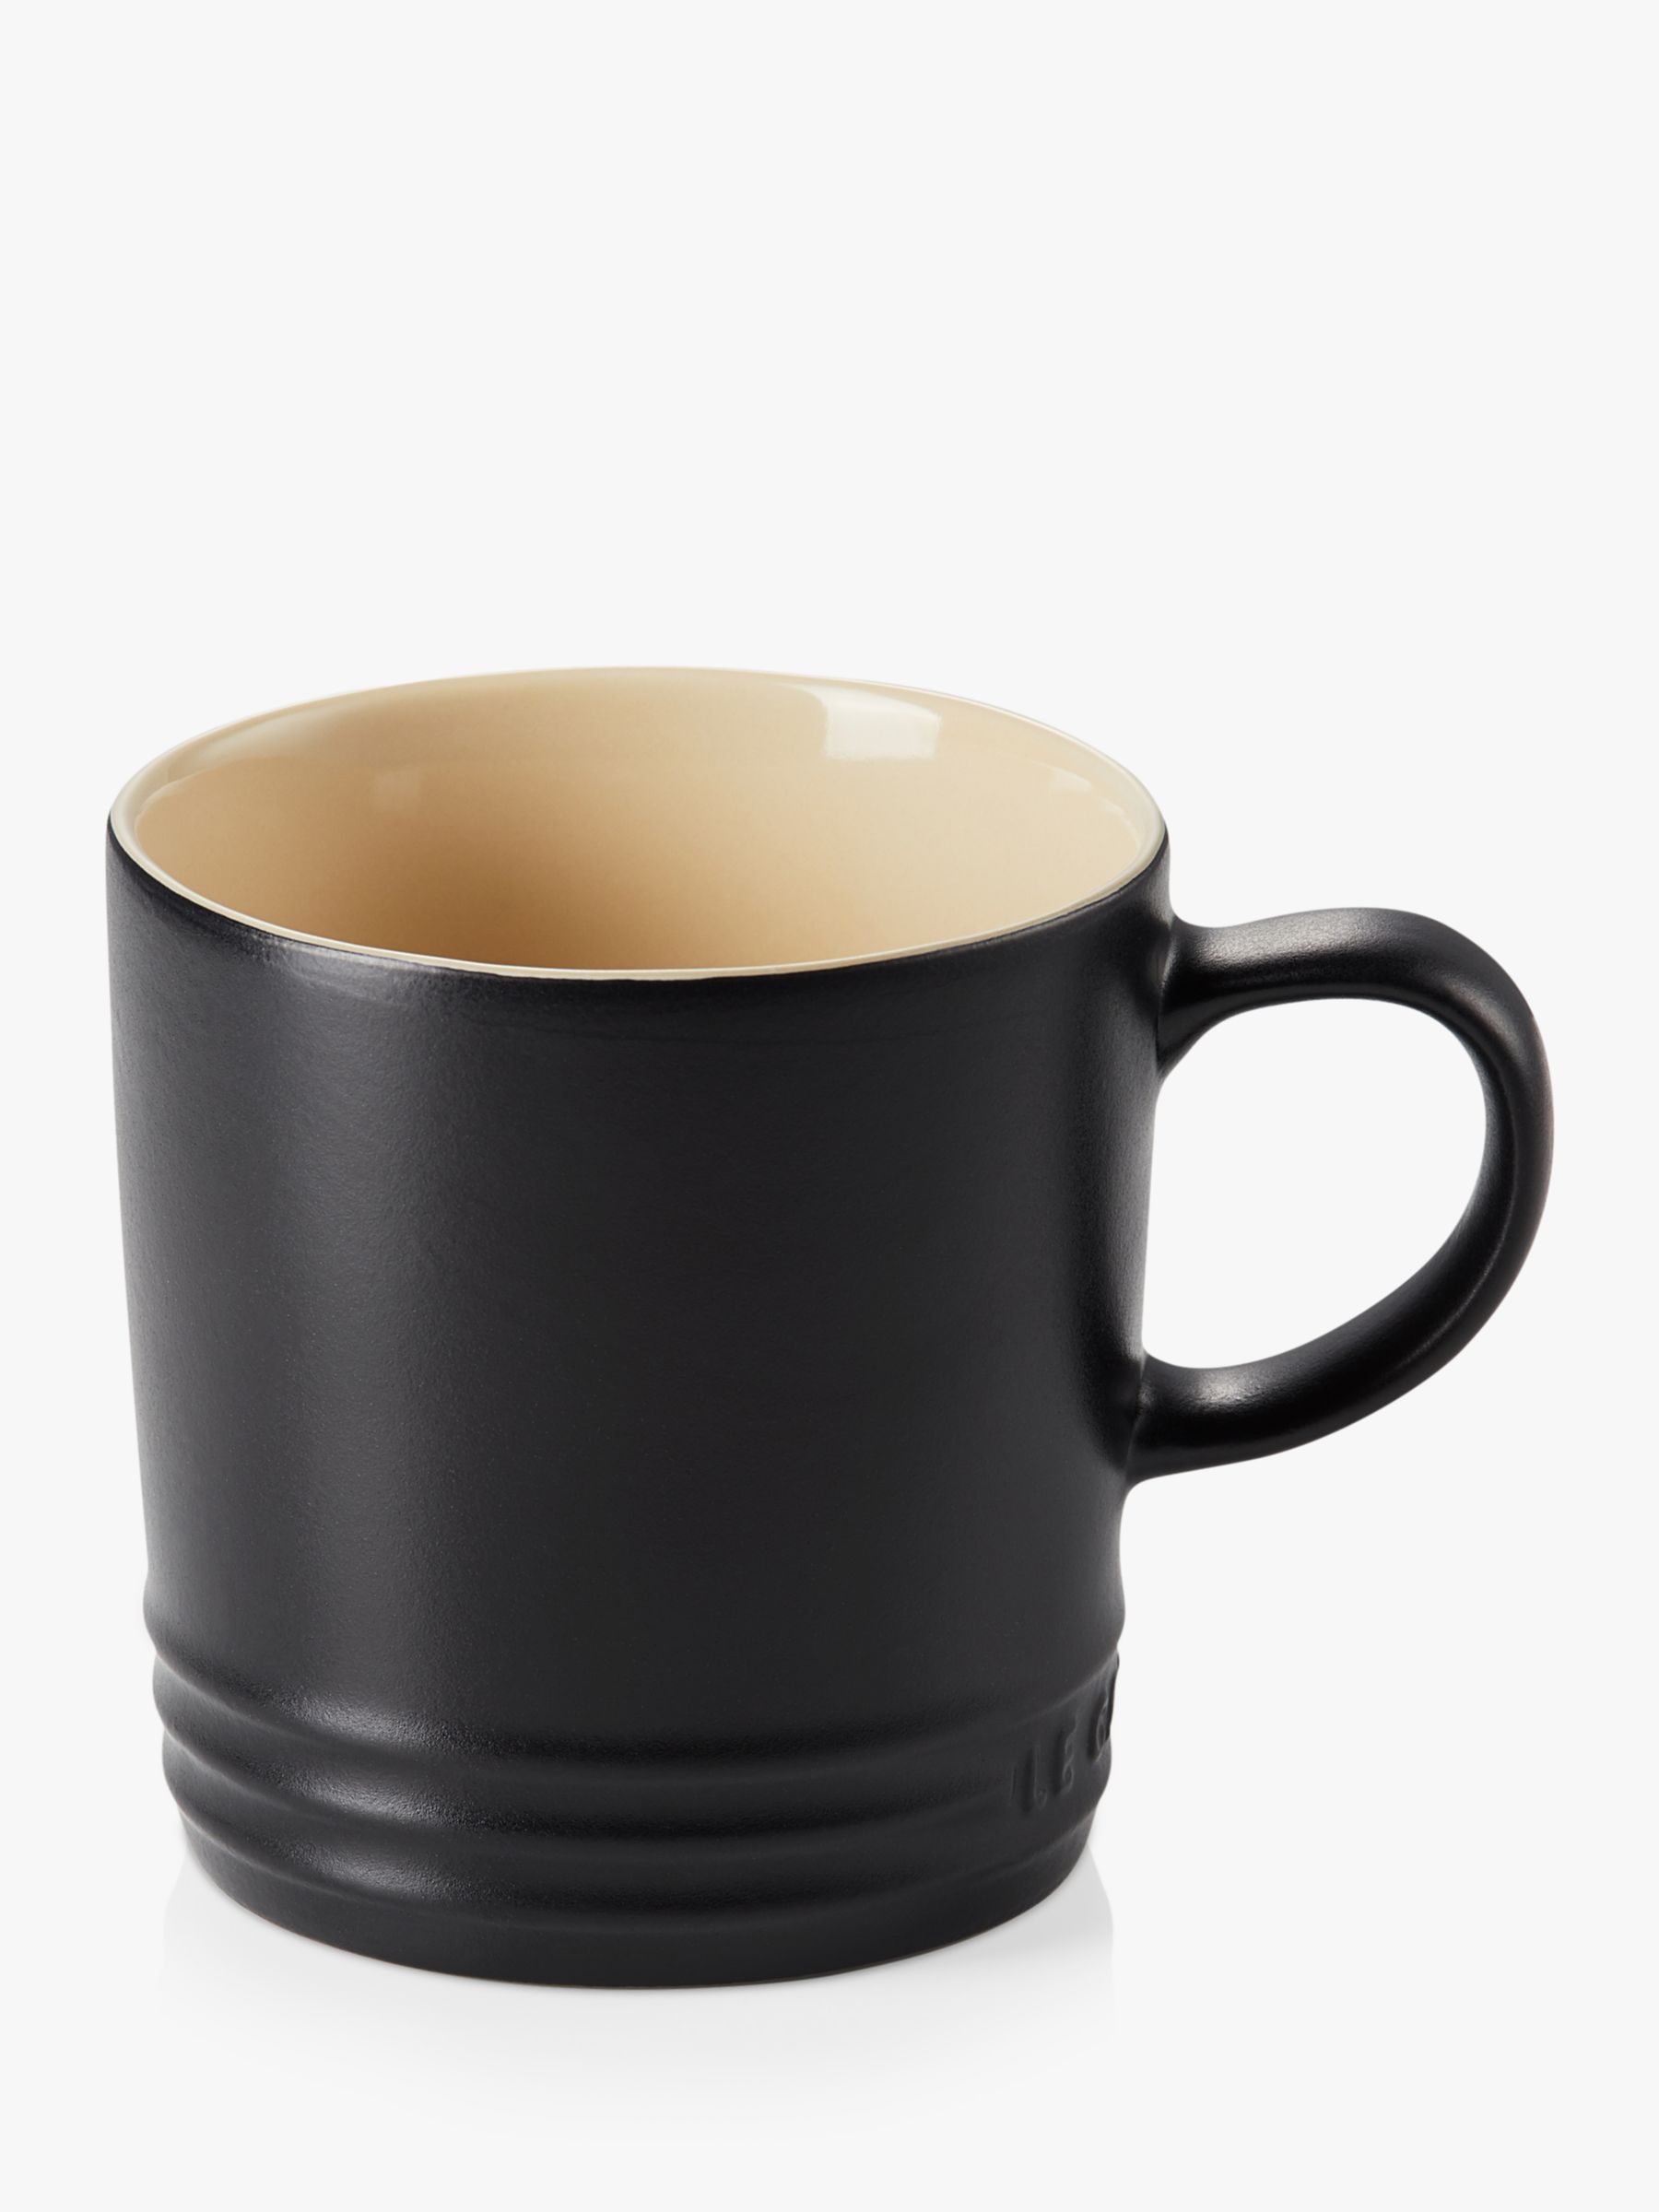 Le Creuset Mug Satin Black Your favourite mug sees you through the good 